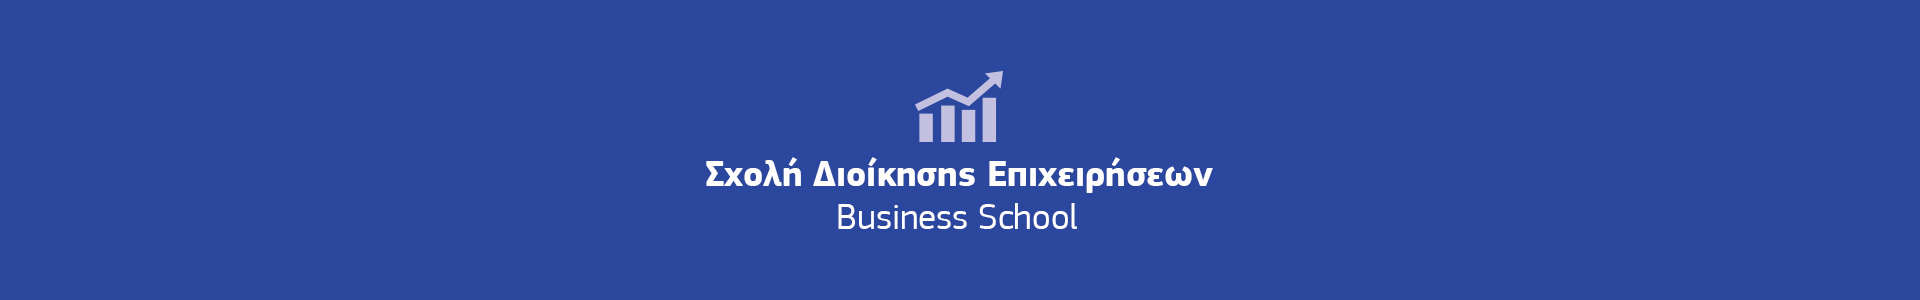 1920x300_business-school